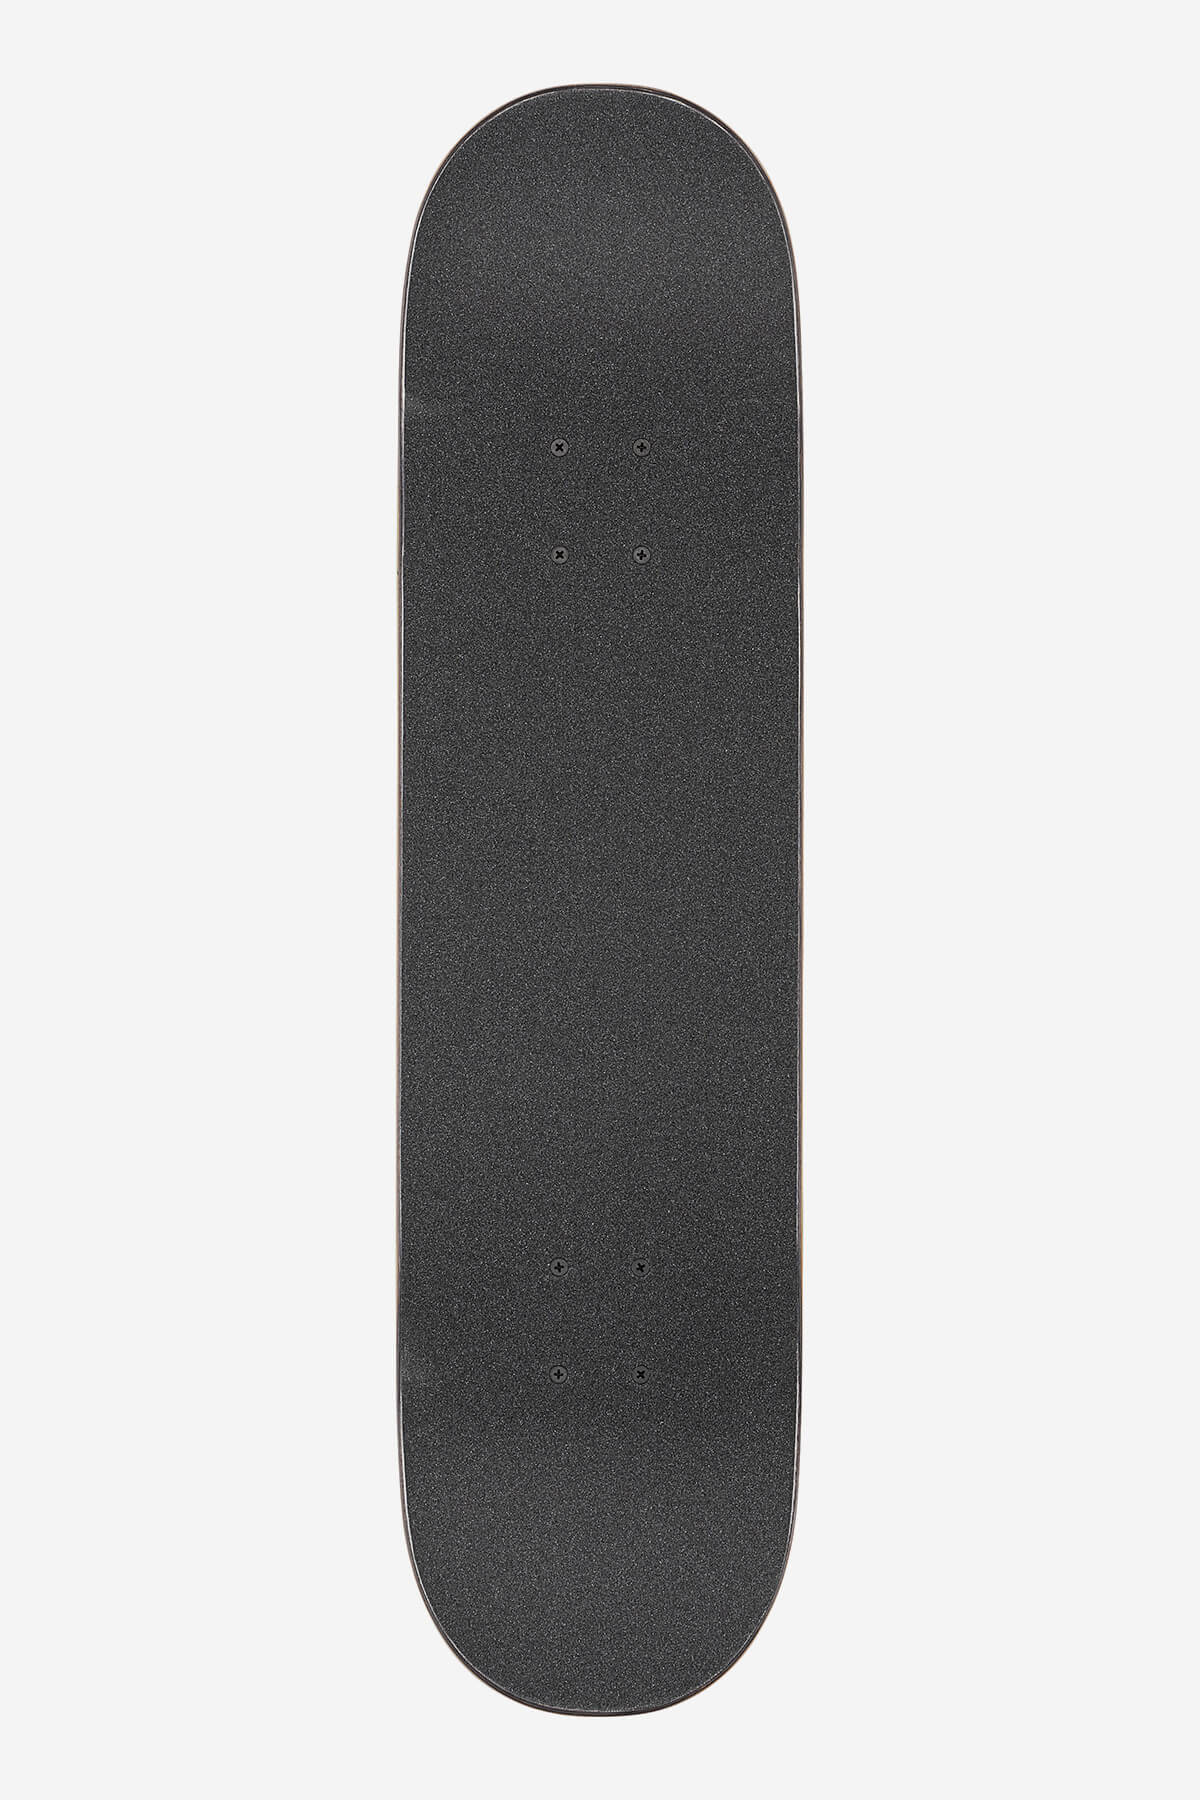 Globe - G1 Natives - Black/Copper - 8.0" Compleet Skateboard